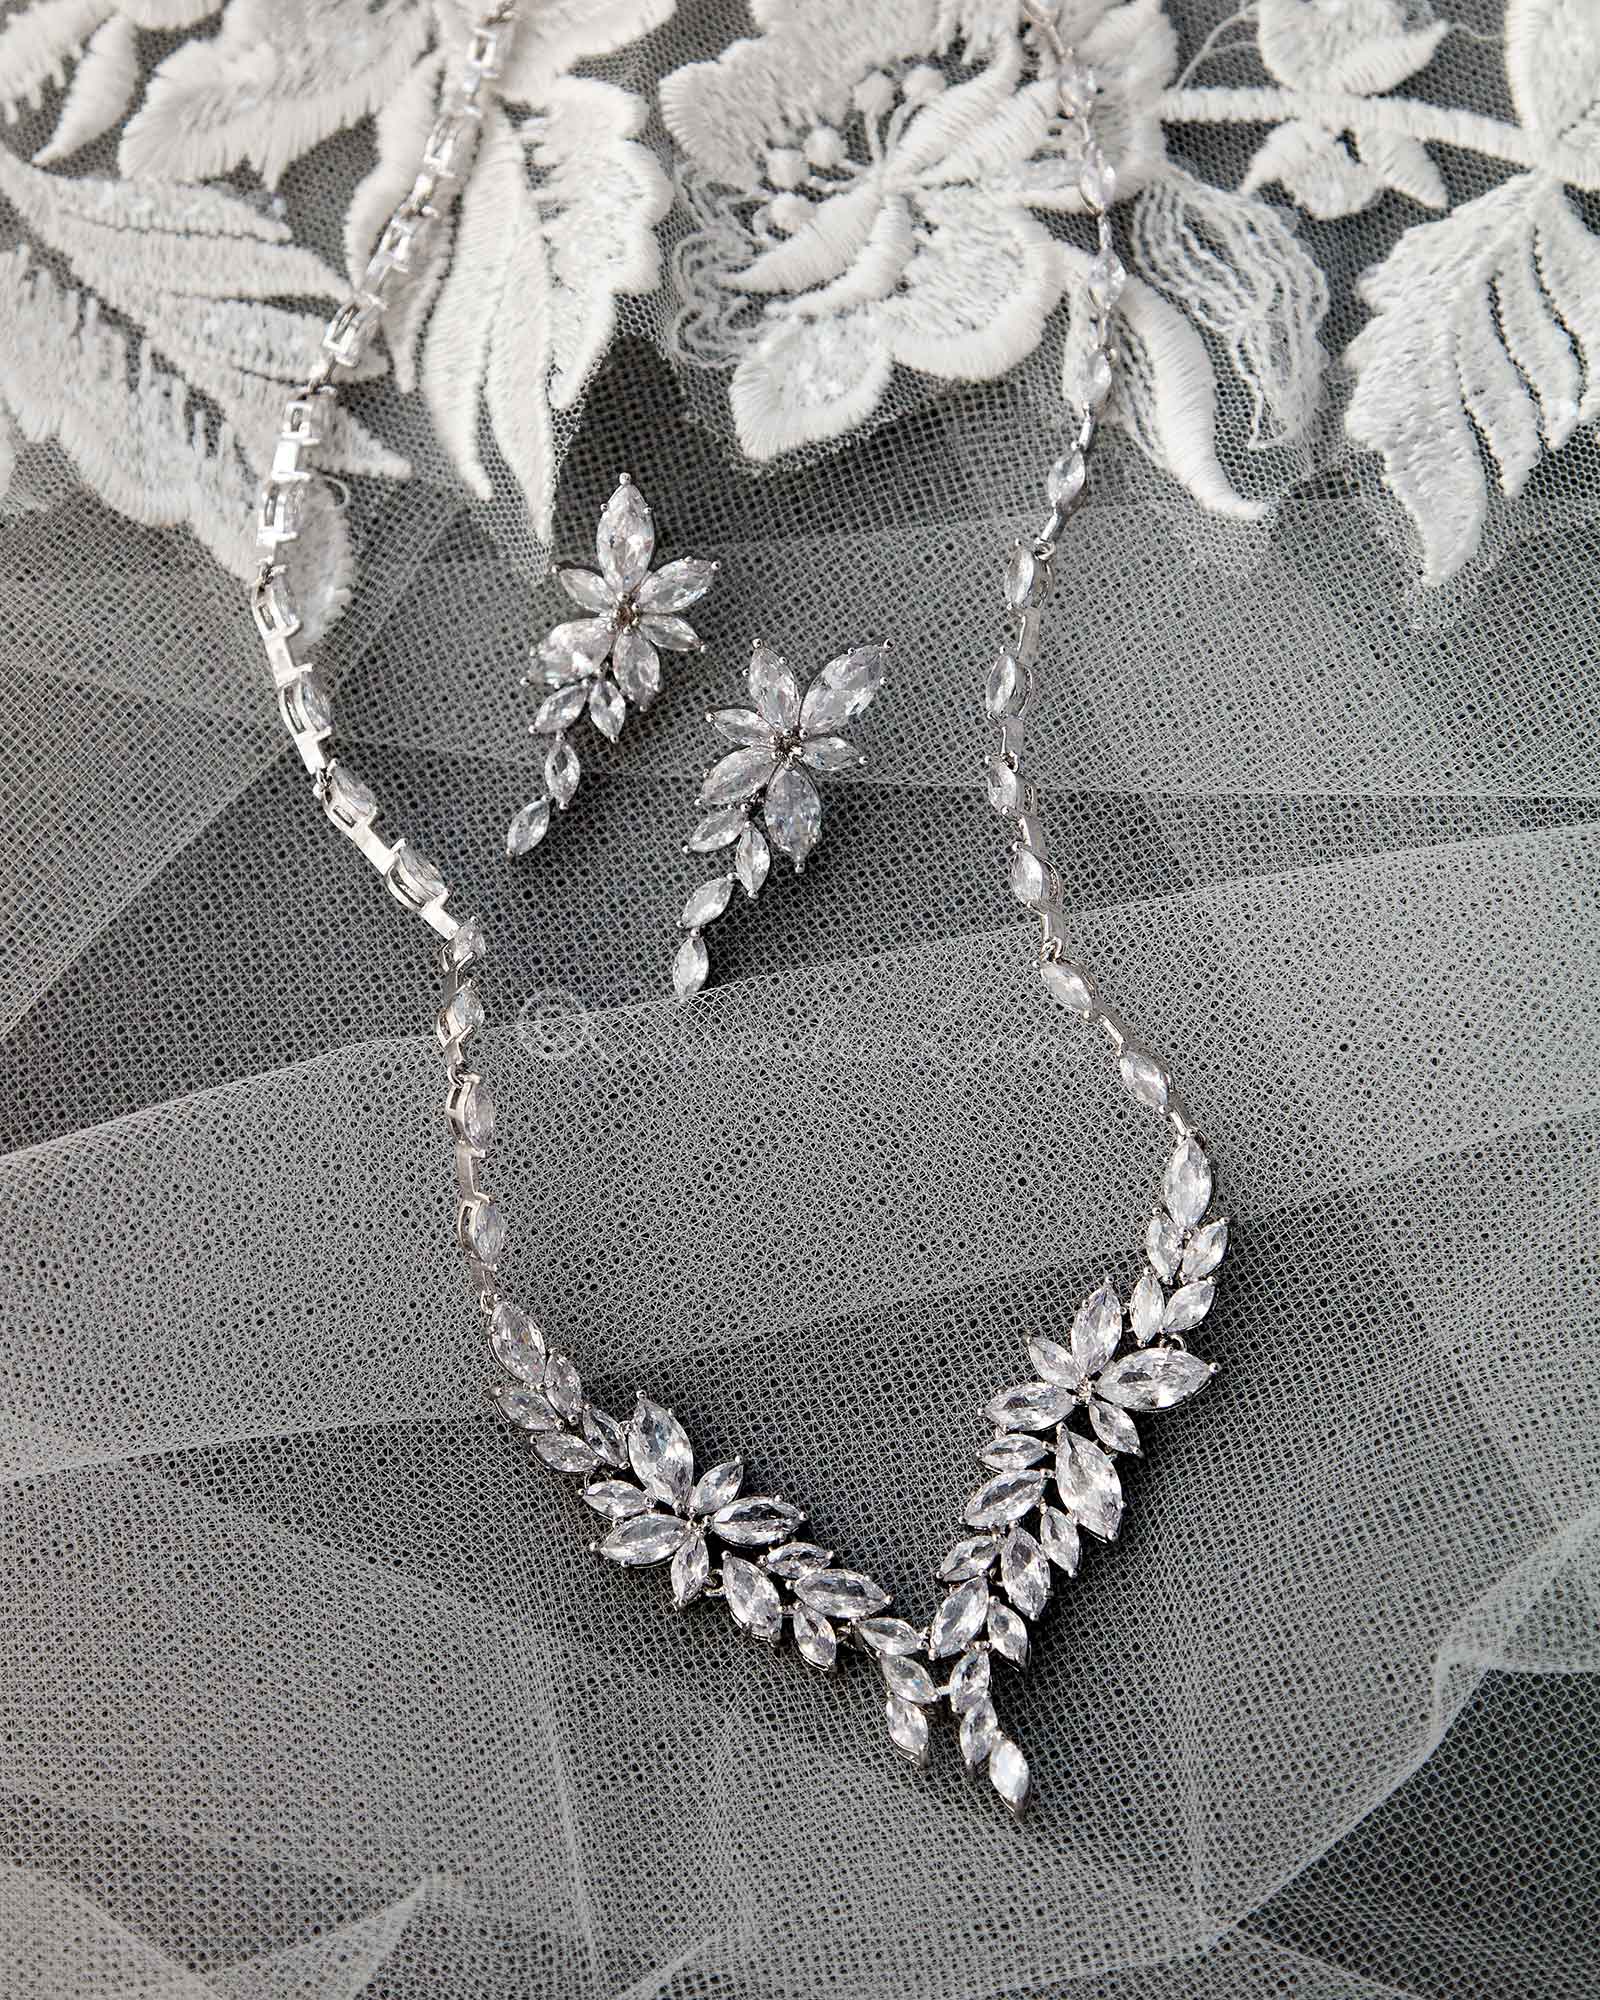 Intricate CZ Leaf Bridal Necklace Set - Cassandra Lynne